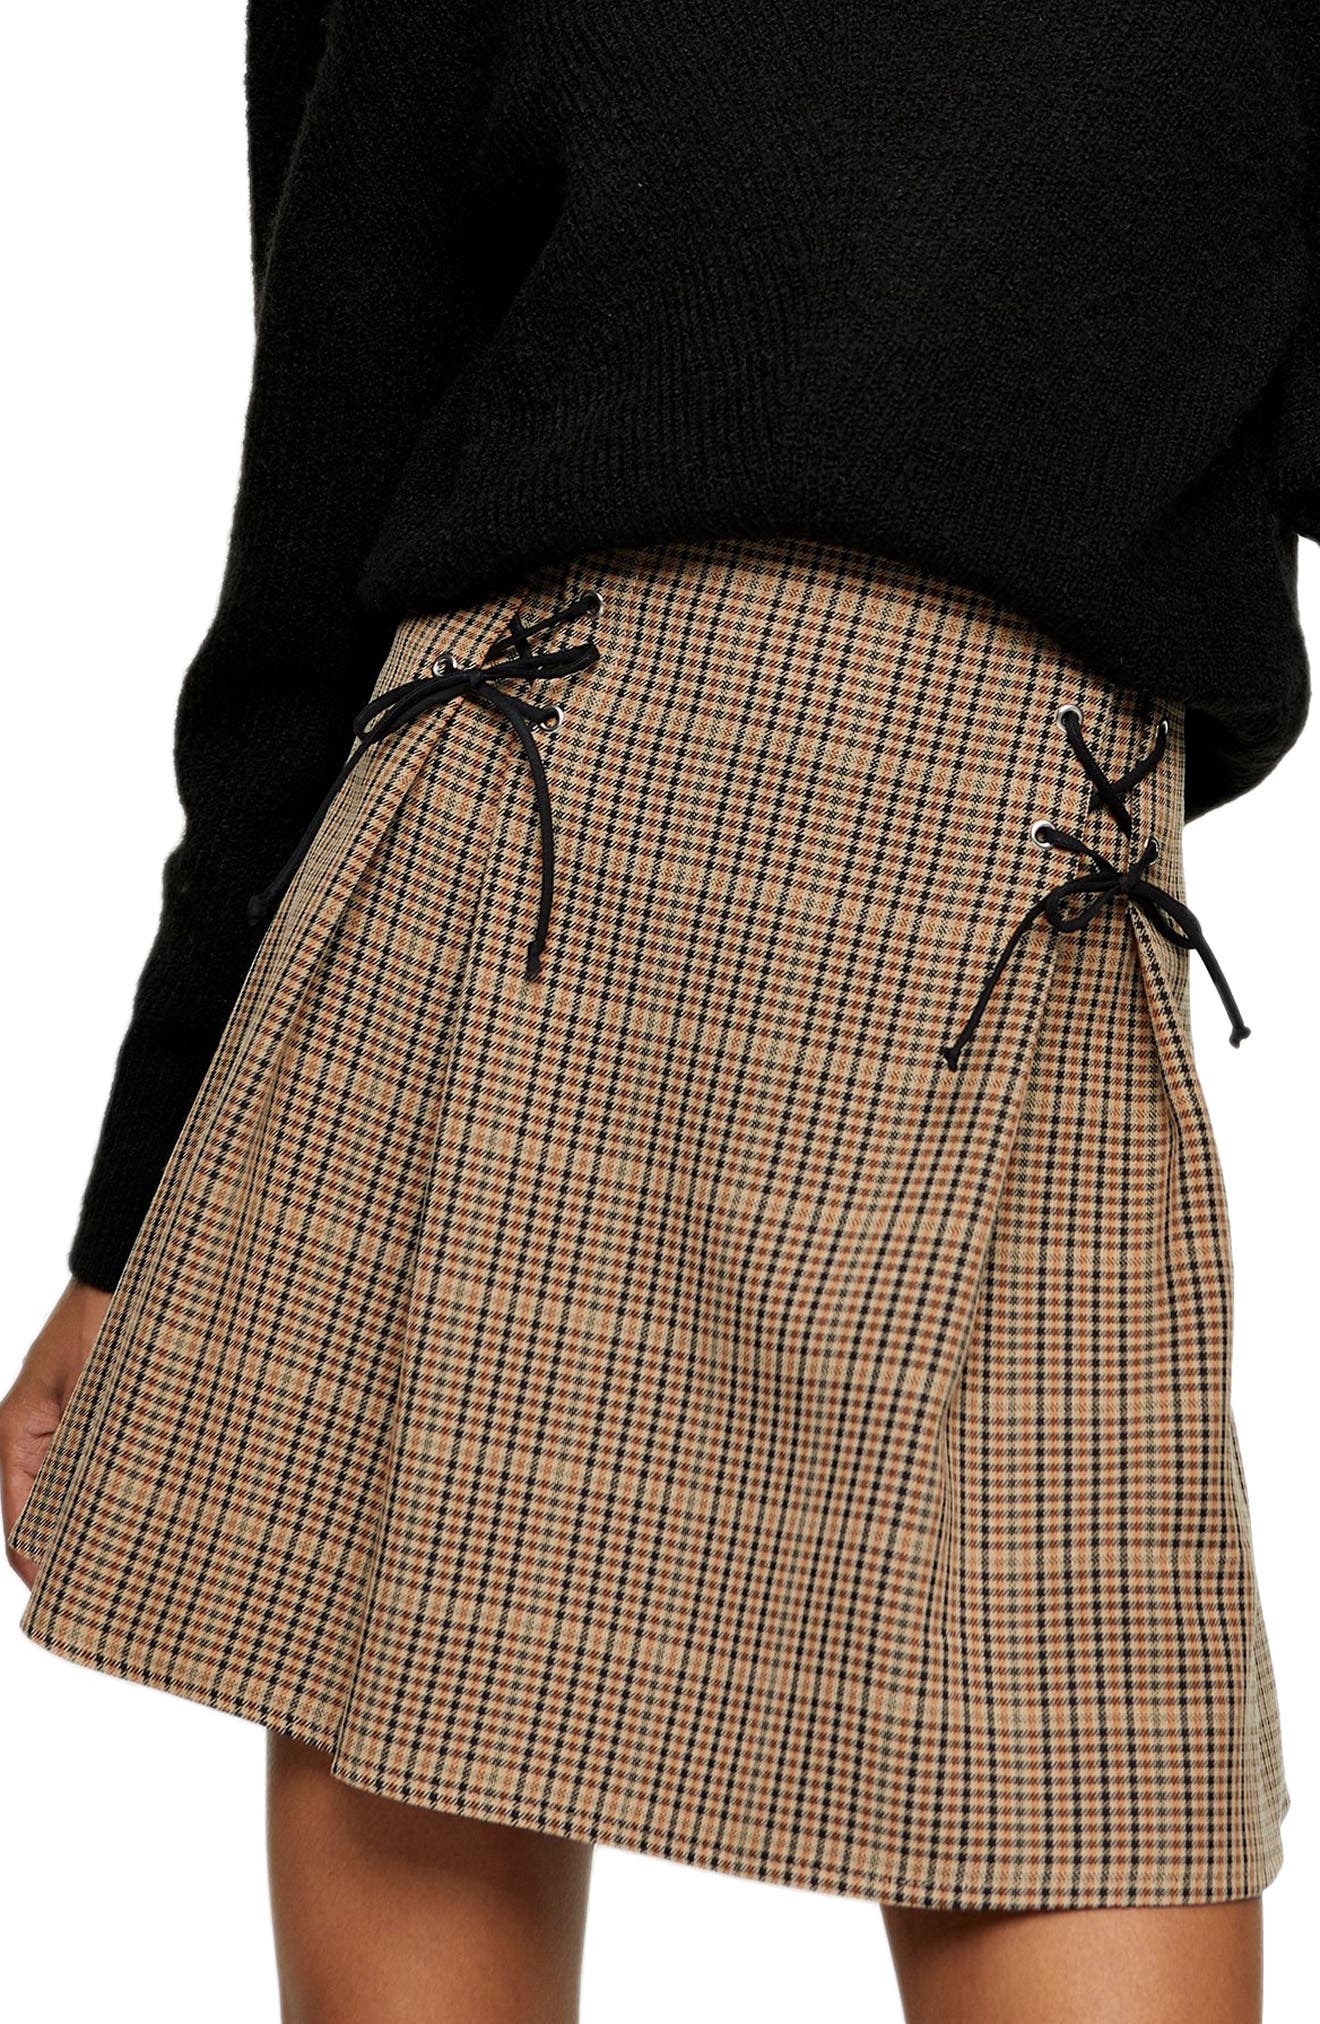 green plaid skirt 5x7